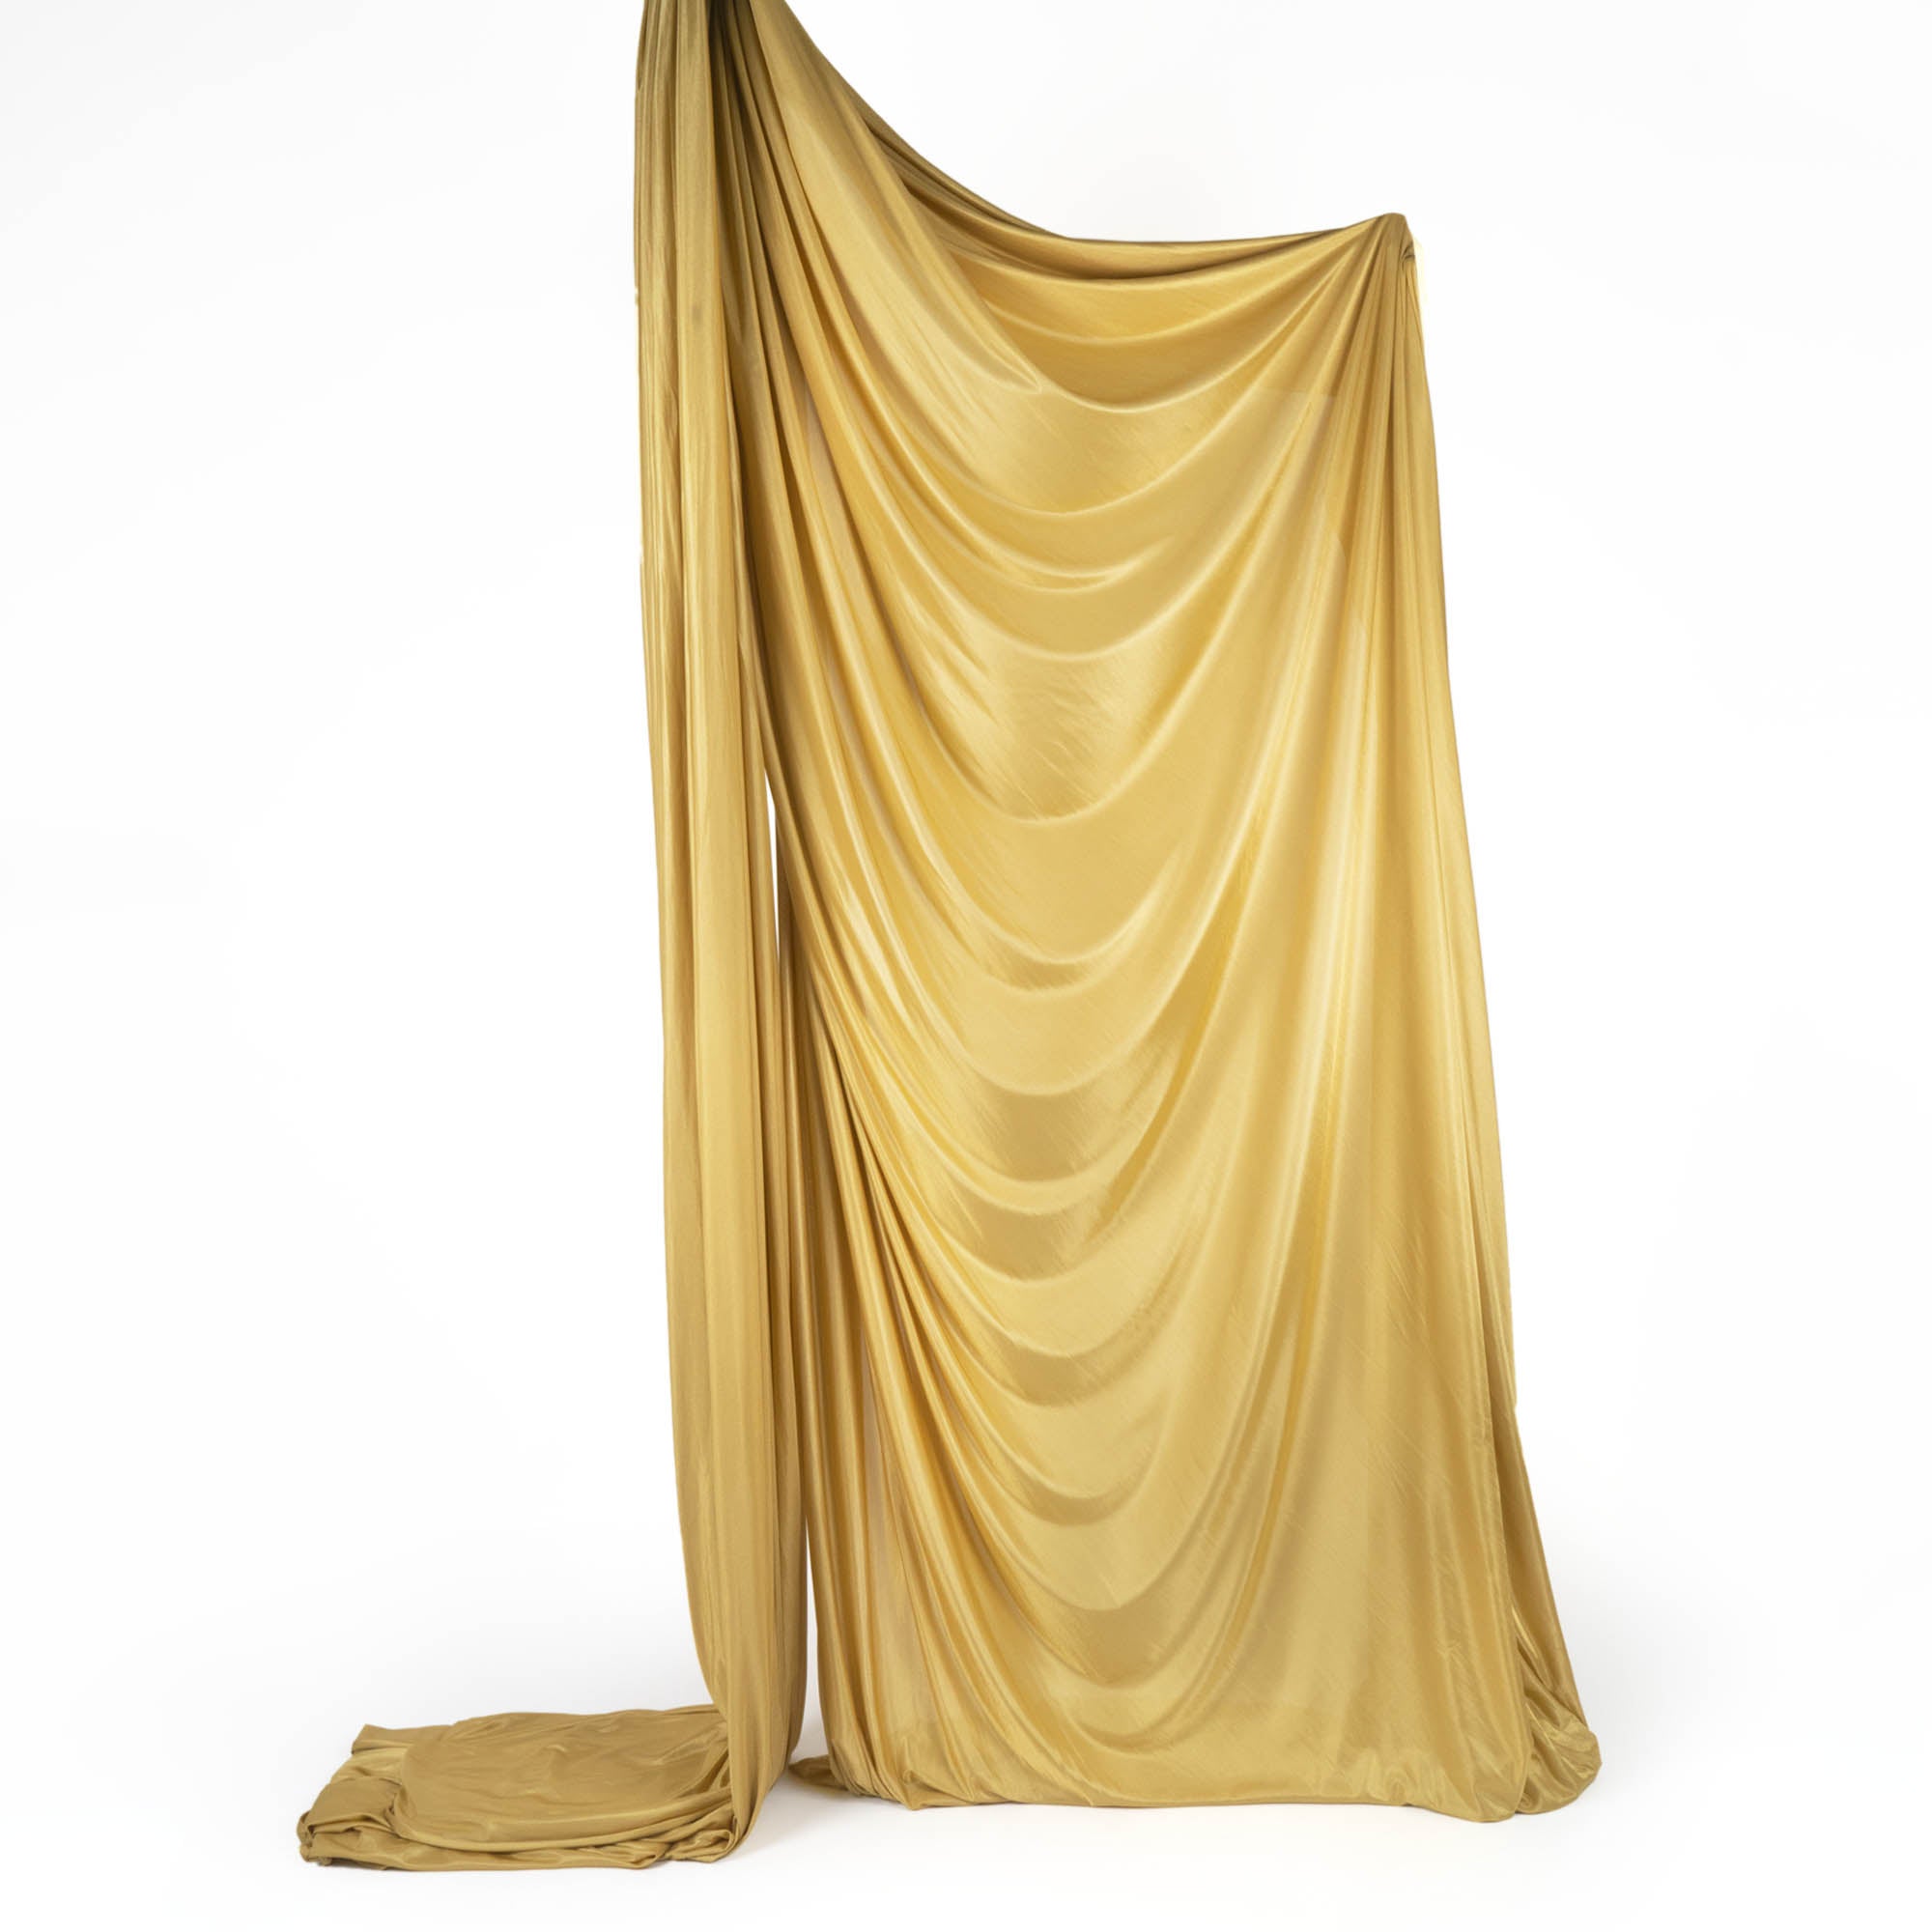 Gold silk rigged